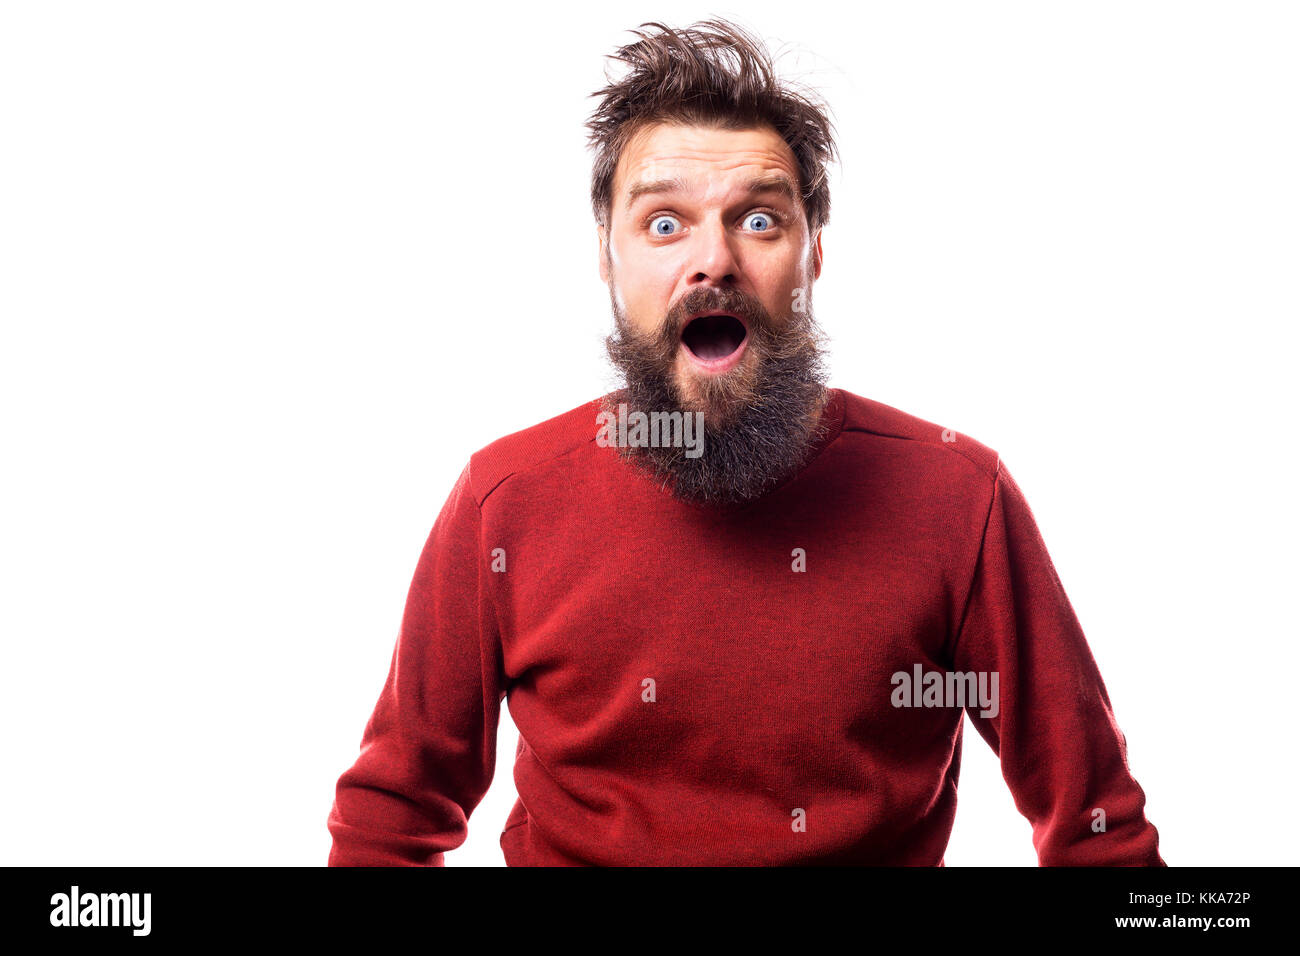 surprised man with disheveled  hair and beard on white backround Stock Photo